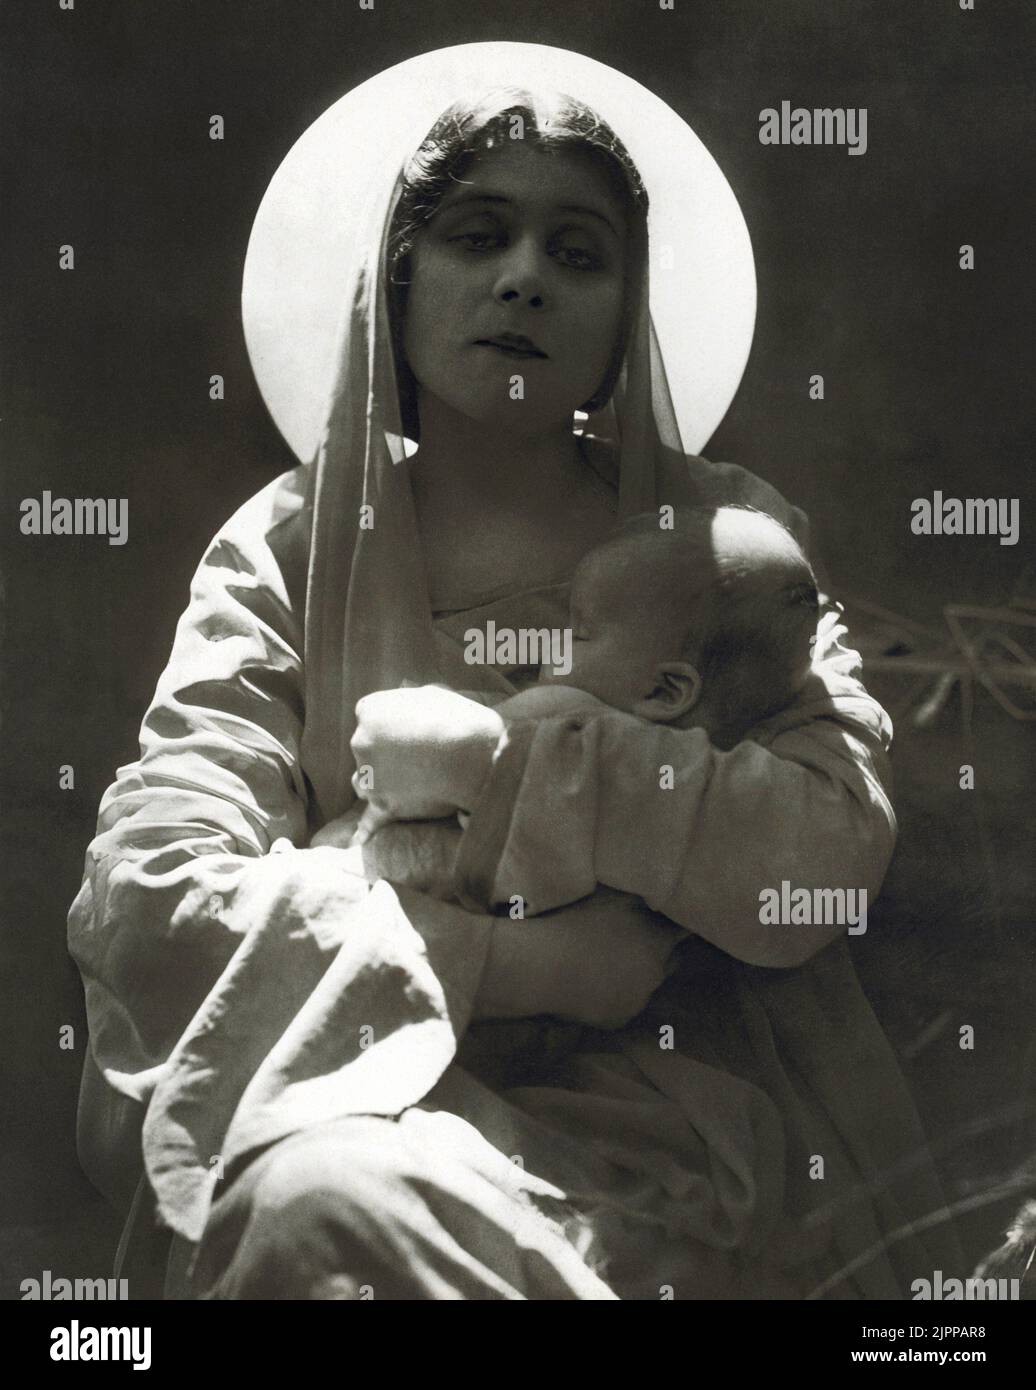 The celebrated Silent Movie actress THEDA BARA ( 1885 - 1955 ) , anagram of Arab Death , in HEART AND SOUL  ( 1917 ) by J. Gordon Edwards - CINEMA - FILM - Madonna - Virgin Mary  - film storico - VAMP - DIVA - DIVINA - velo - veil  - maternità - mamma e figlio - bebè ----  Archivio GBB Stock Photo